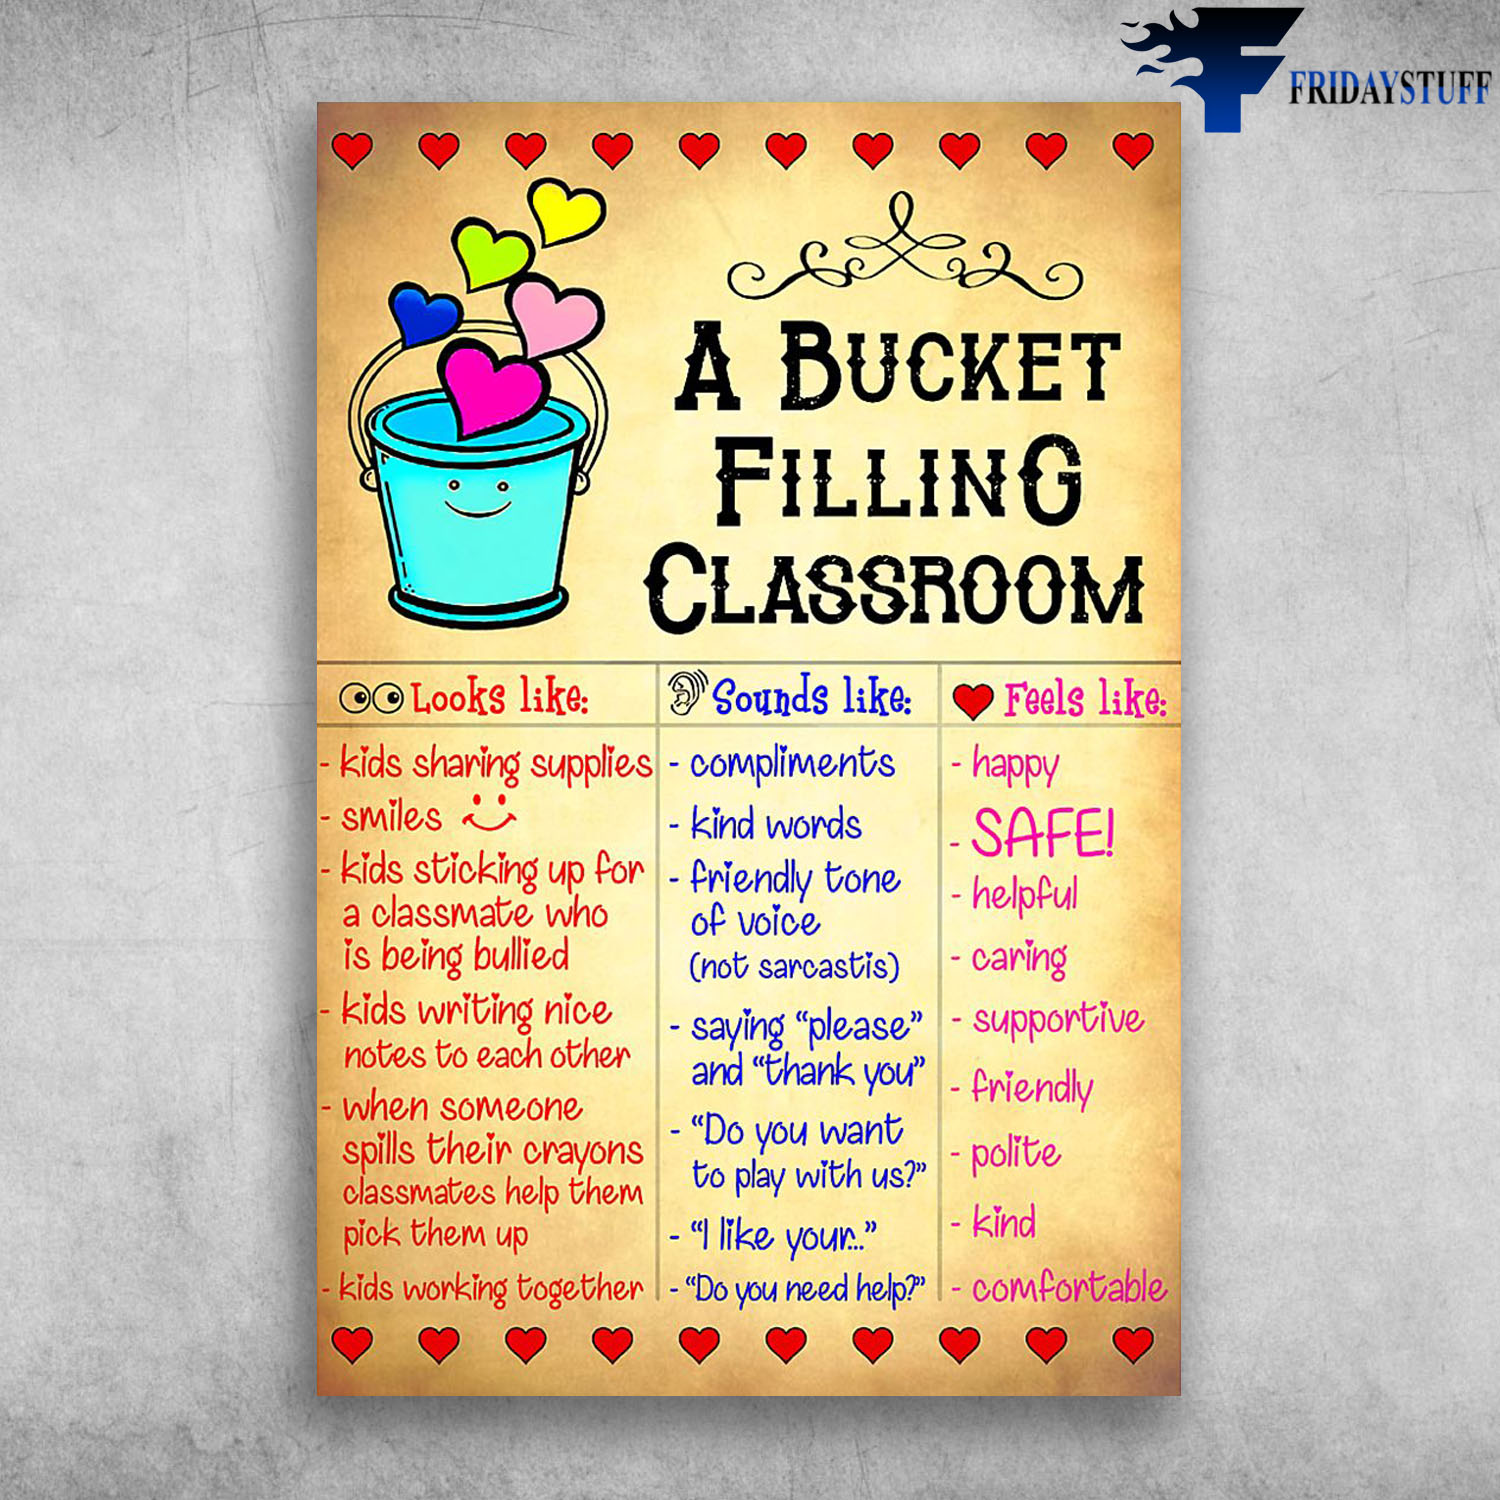 A Bucket Filling Classroom Looks Life smiles Sounds Like Kind Words Feels Like Safe